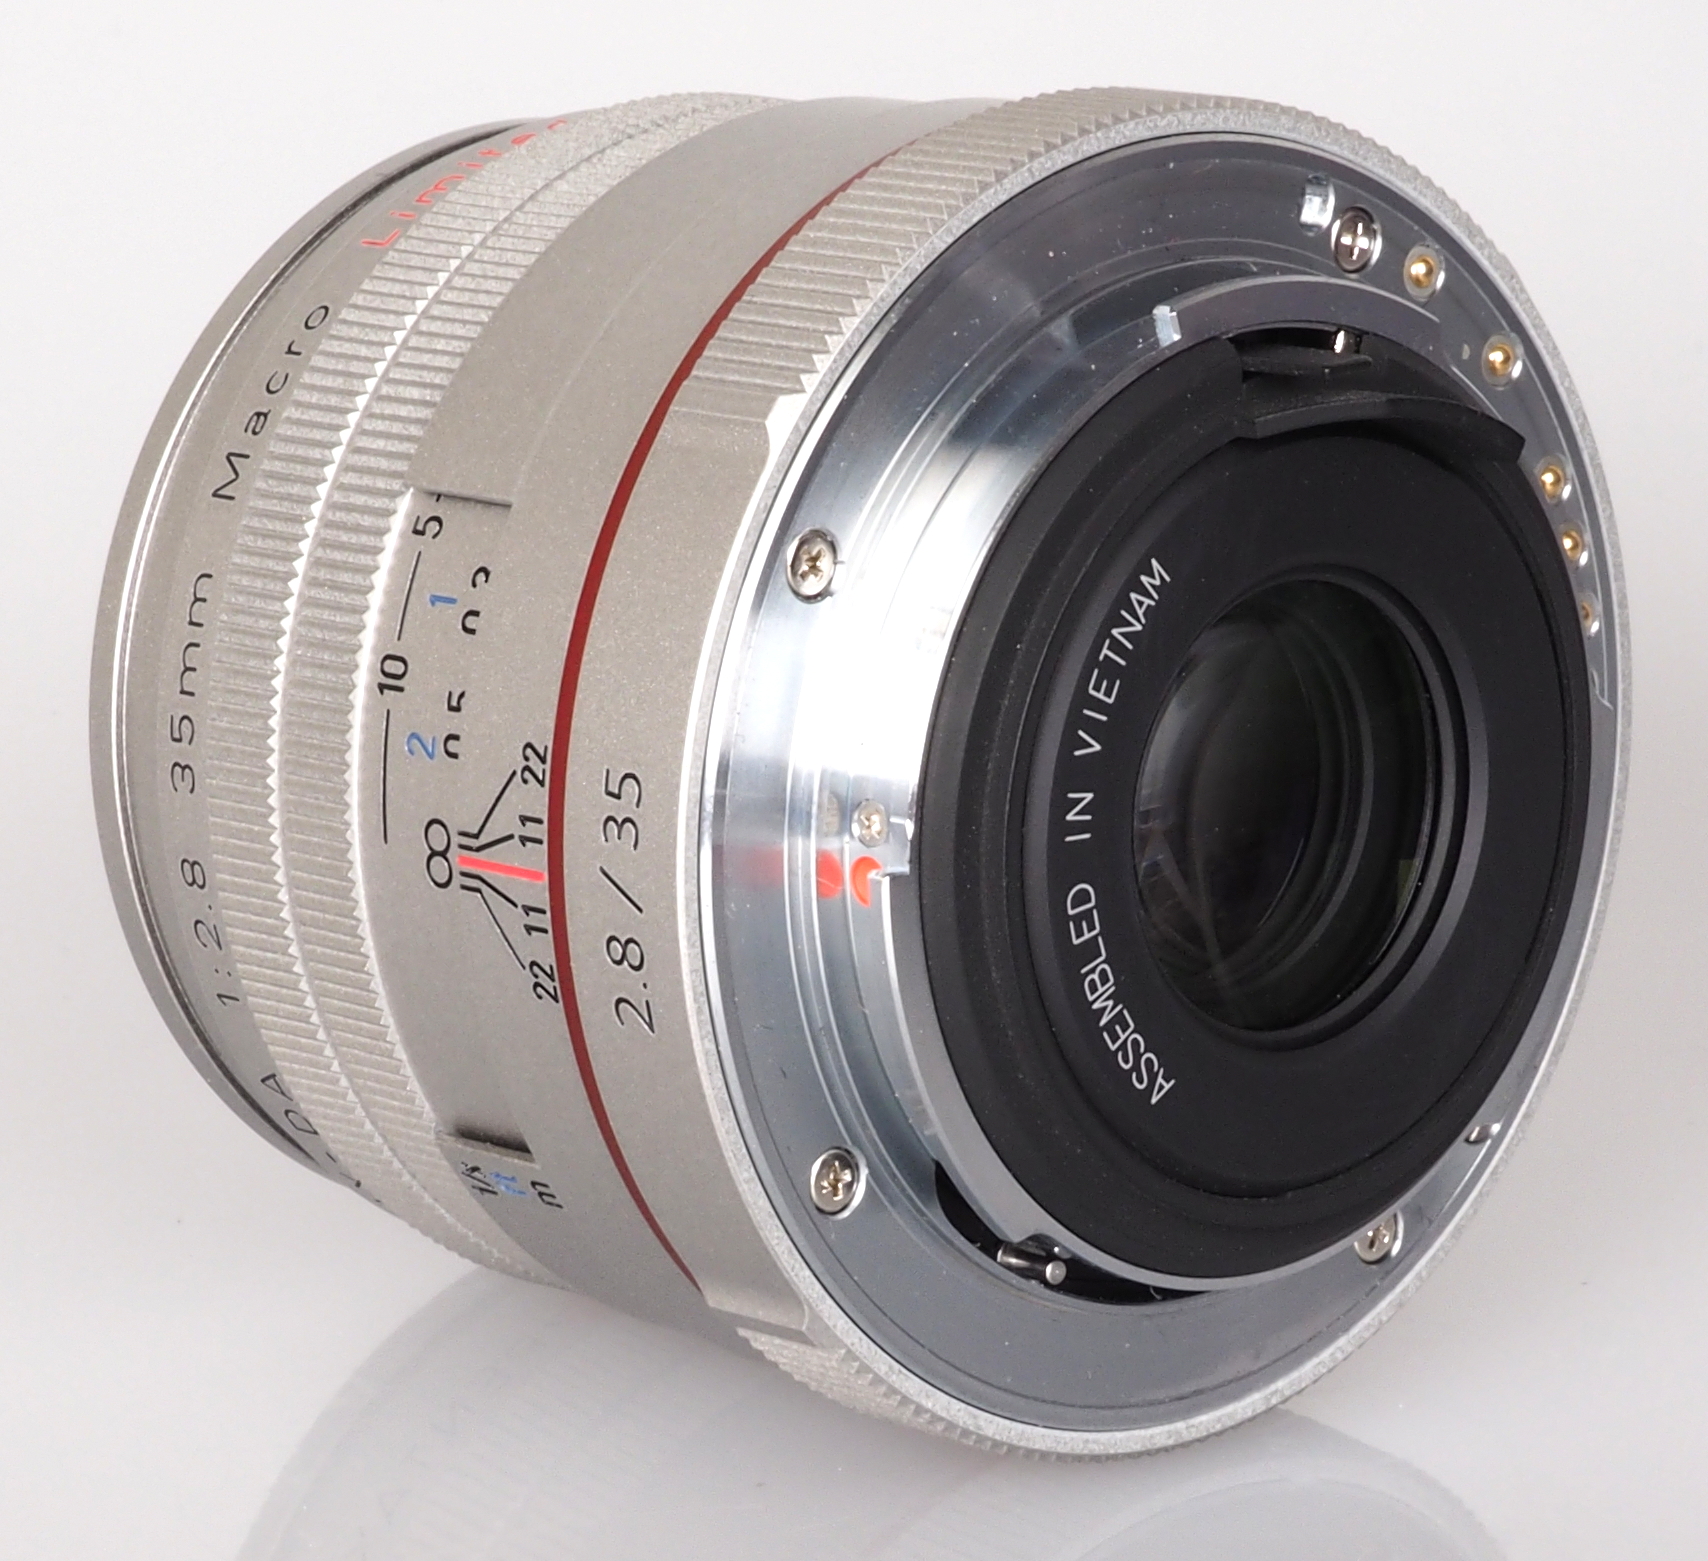 HD PENTAX-DA 35mm f/2.8 Macro Limited Lens Review